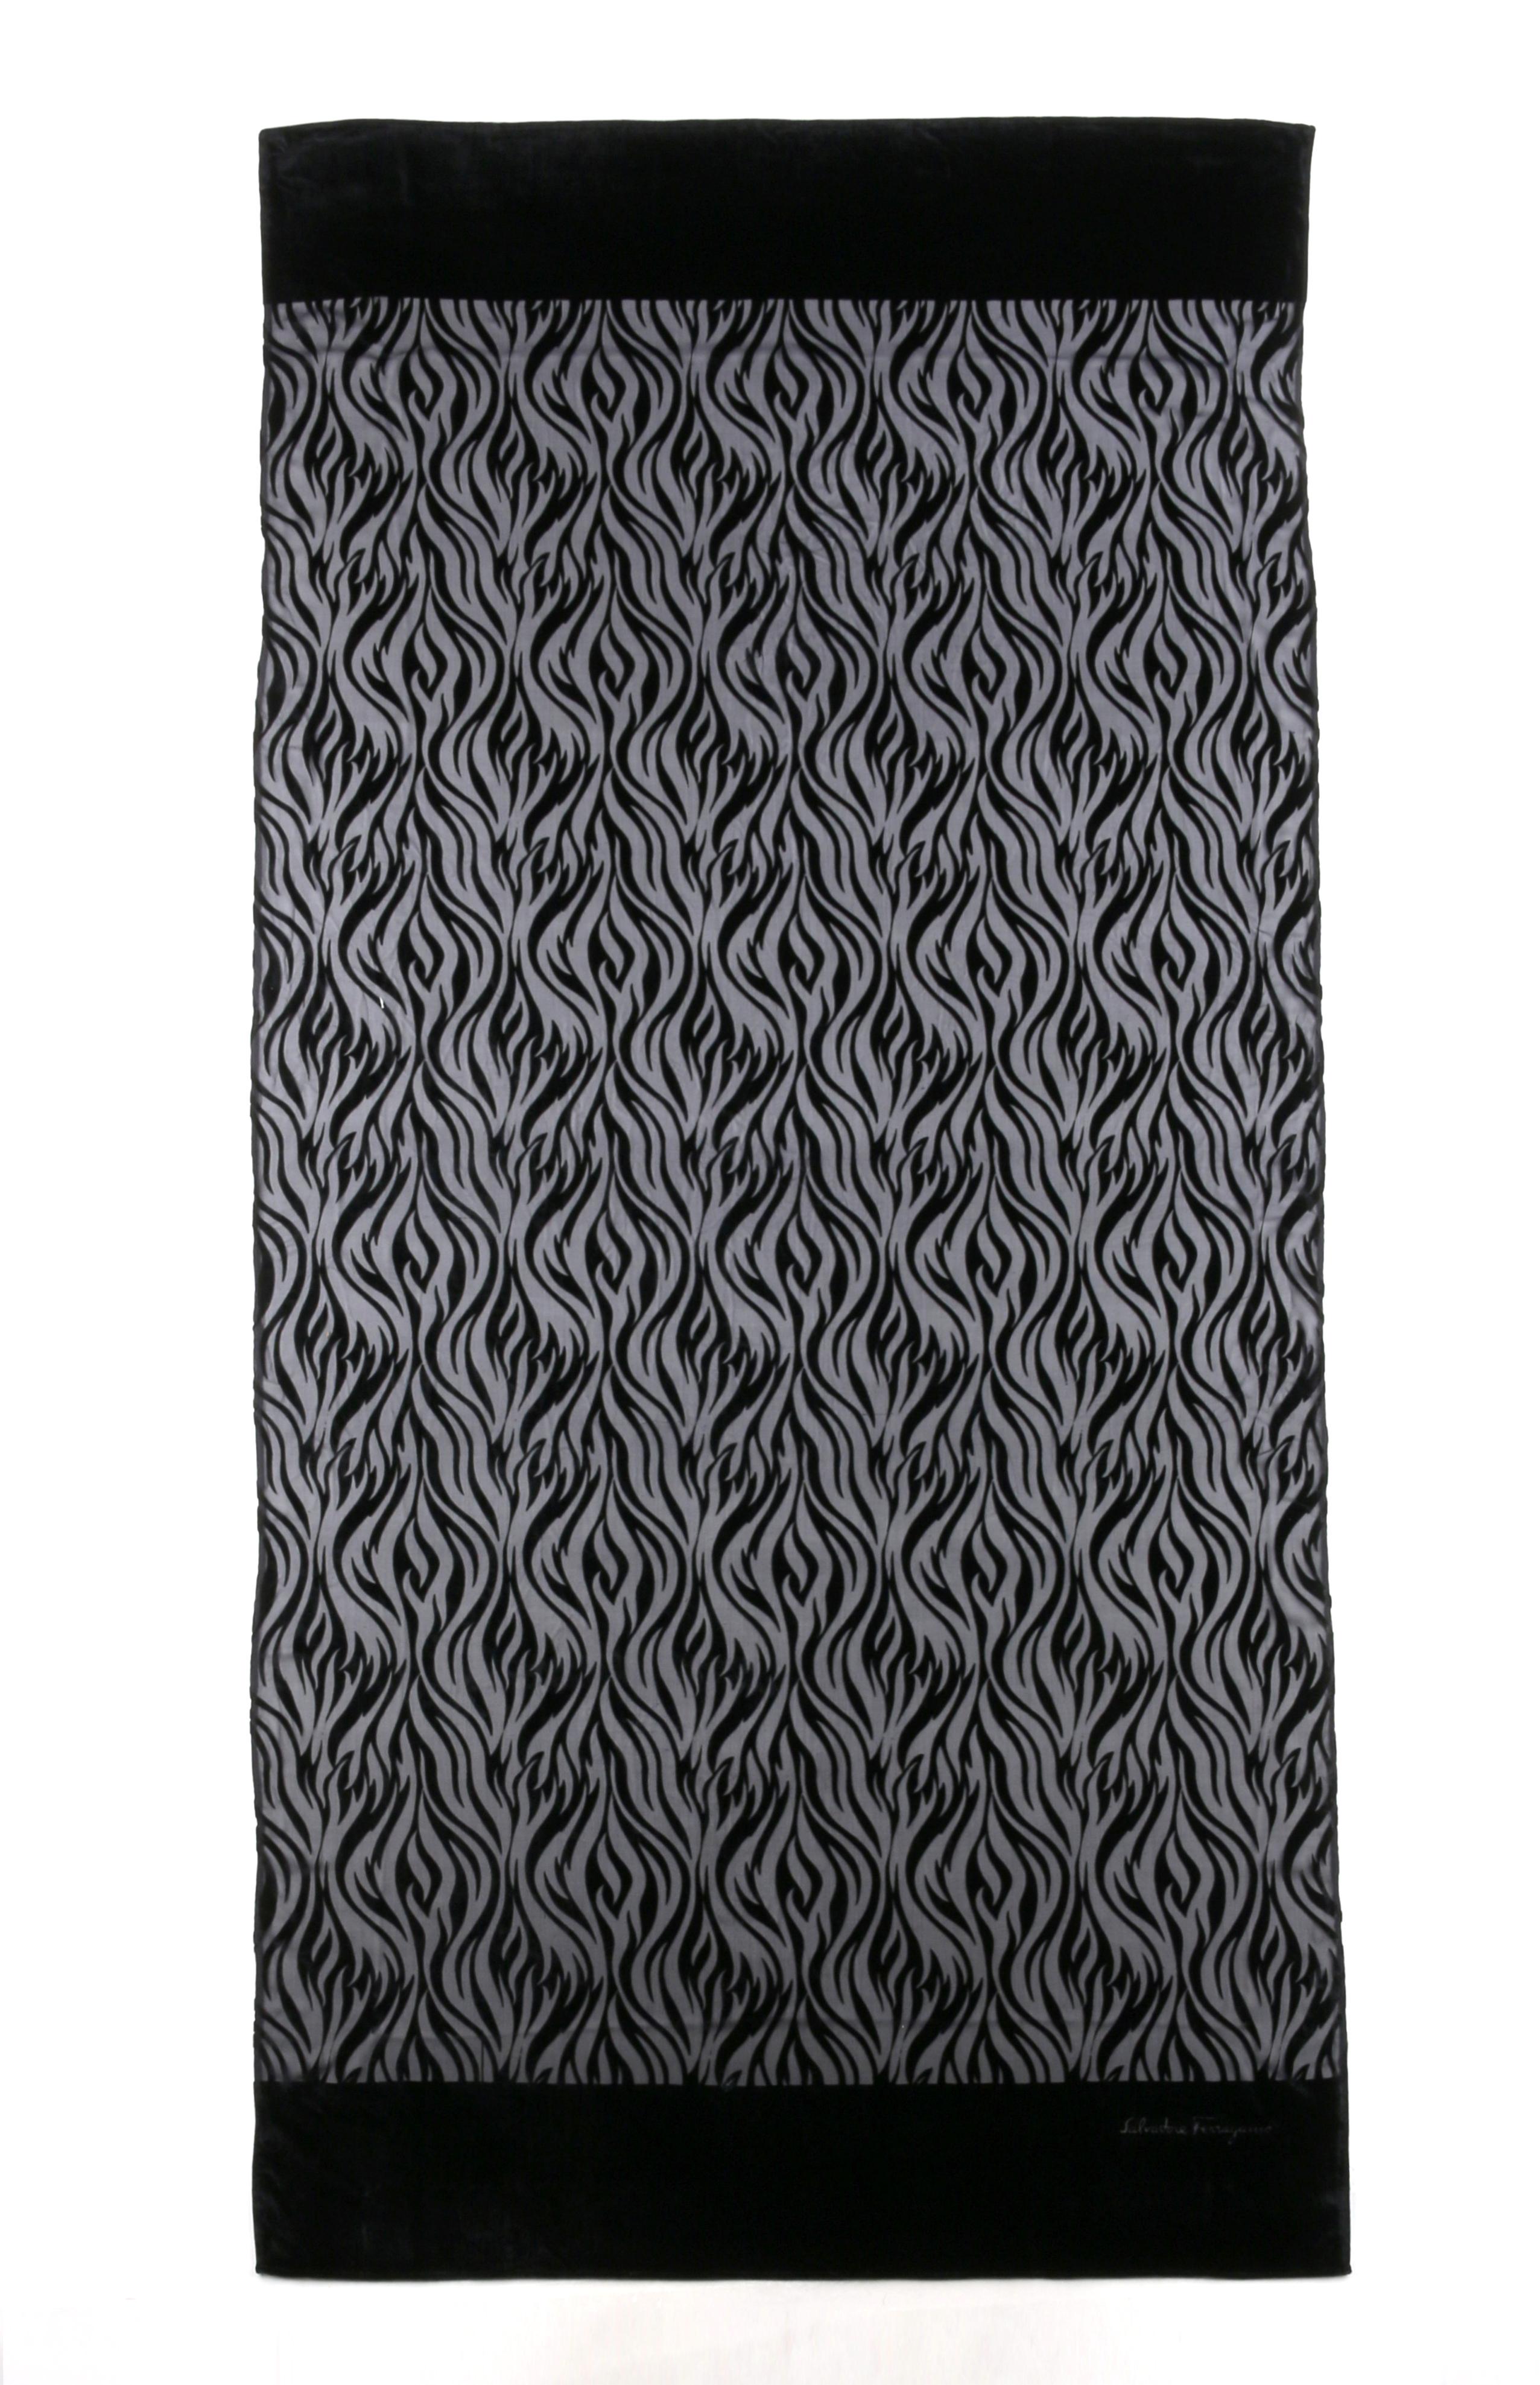 DESCRIPTION: SALVATORE FERRAGAMO Black Tiger Animal Stripe Velvet Burnout Oblong Silk Scarf
 
Brand / Manufacturer: Salvatore Ferragamo
Style: Oblong scarf
Color(s): Black
Lined: No
Marked Fabric Content: 82% Viscose, 18% Silk
Additional Details /